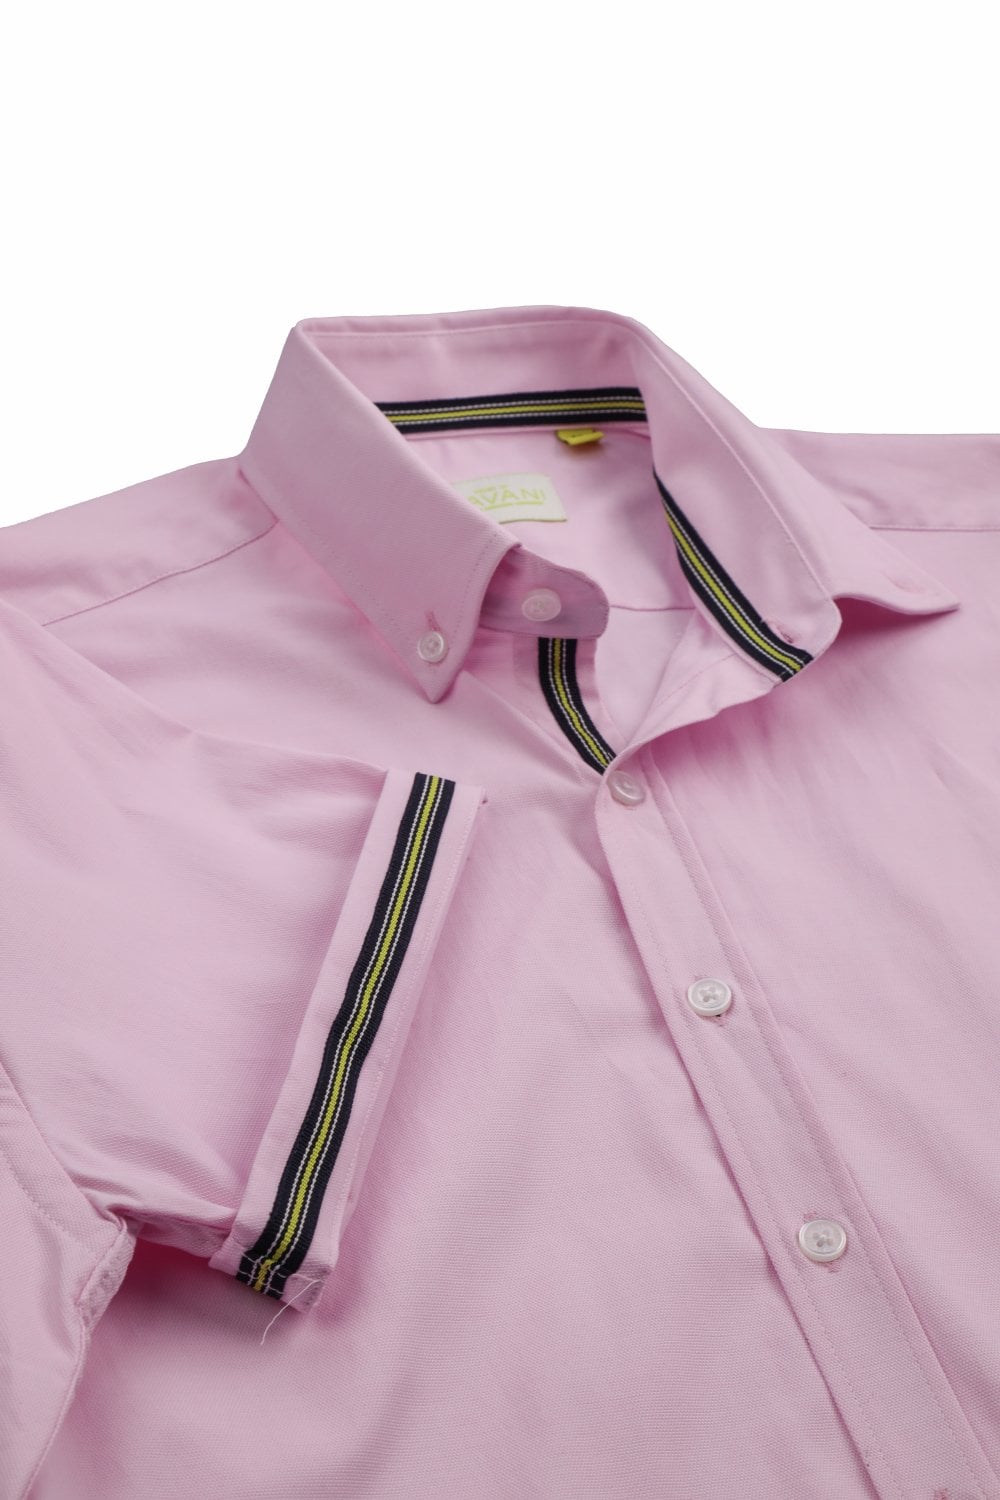 Vito Pink Short Sleeve Shirt - Shirts - S - THREADPEPPER